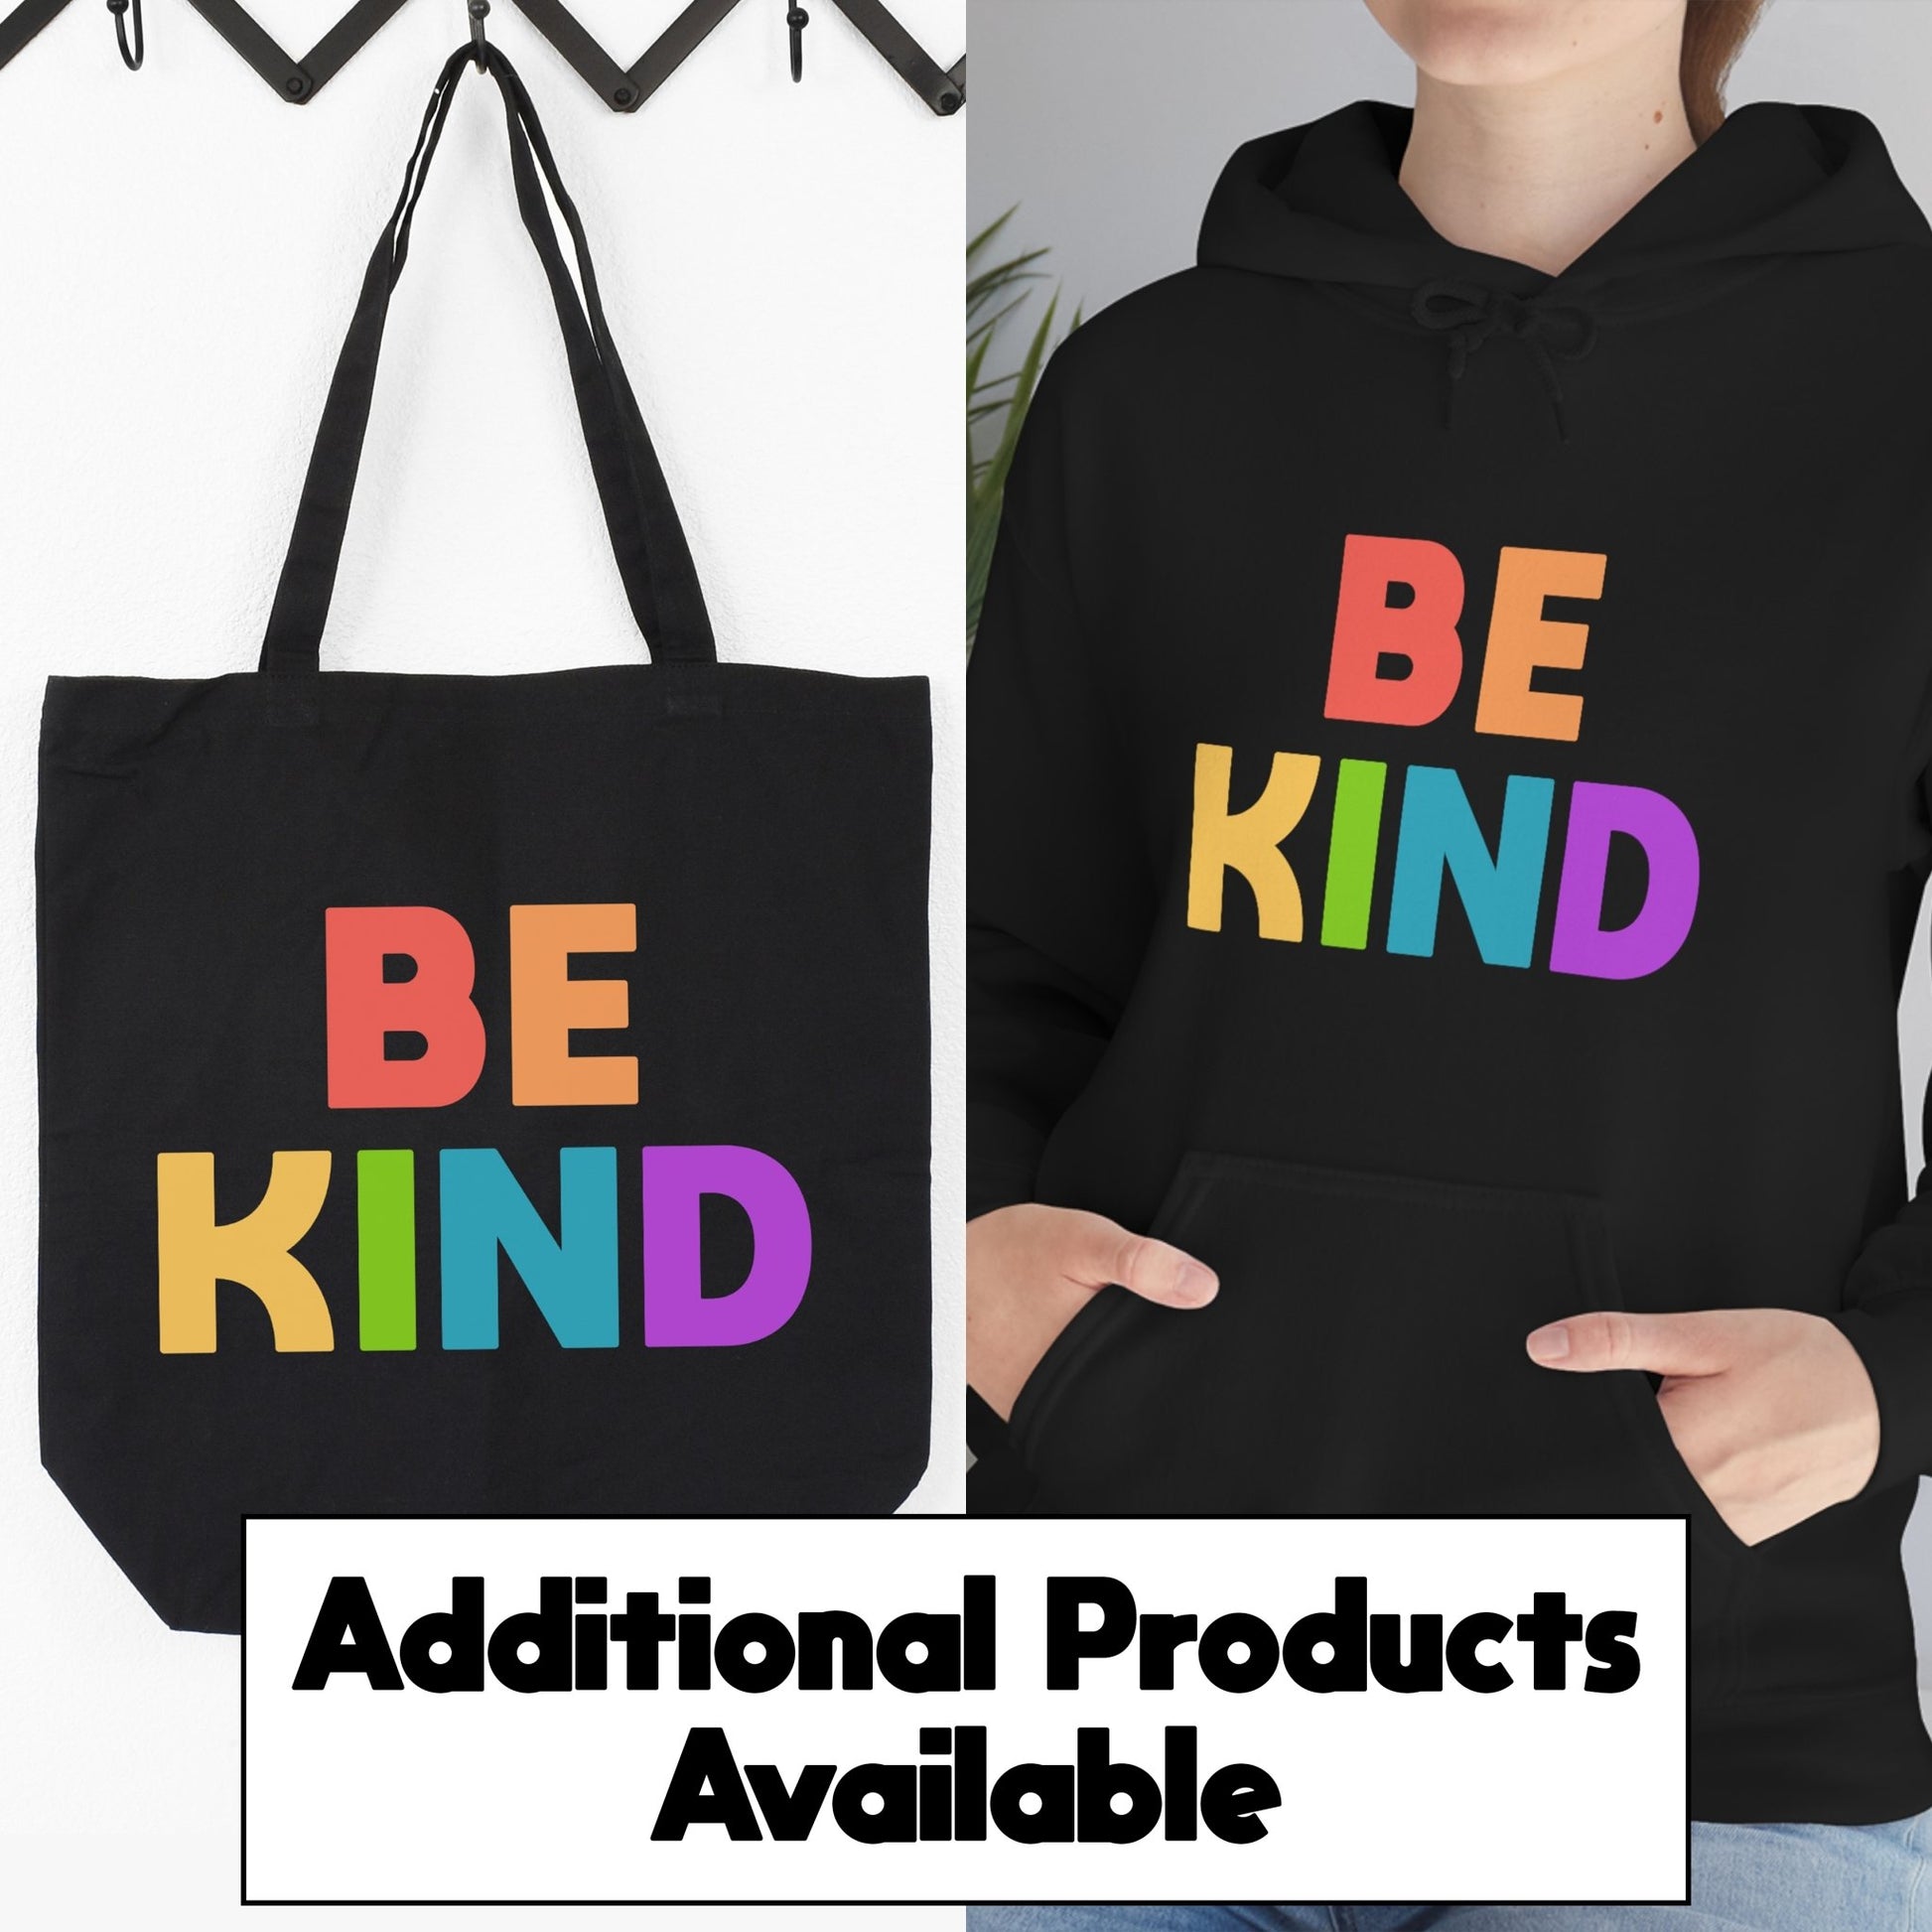 Be Kind Rainbow | Notebook - Detezi Designs-11715509840448999549